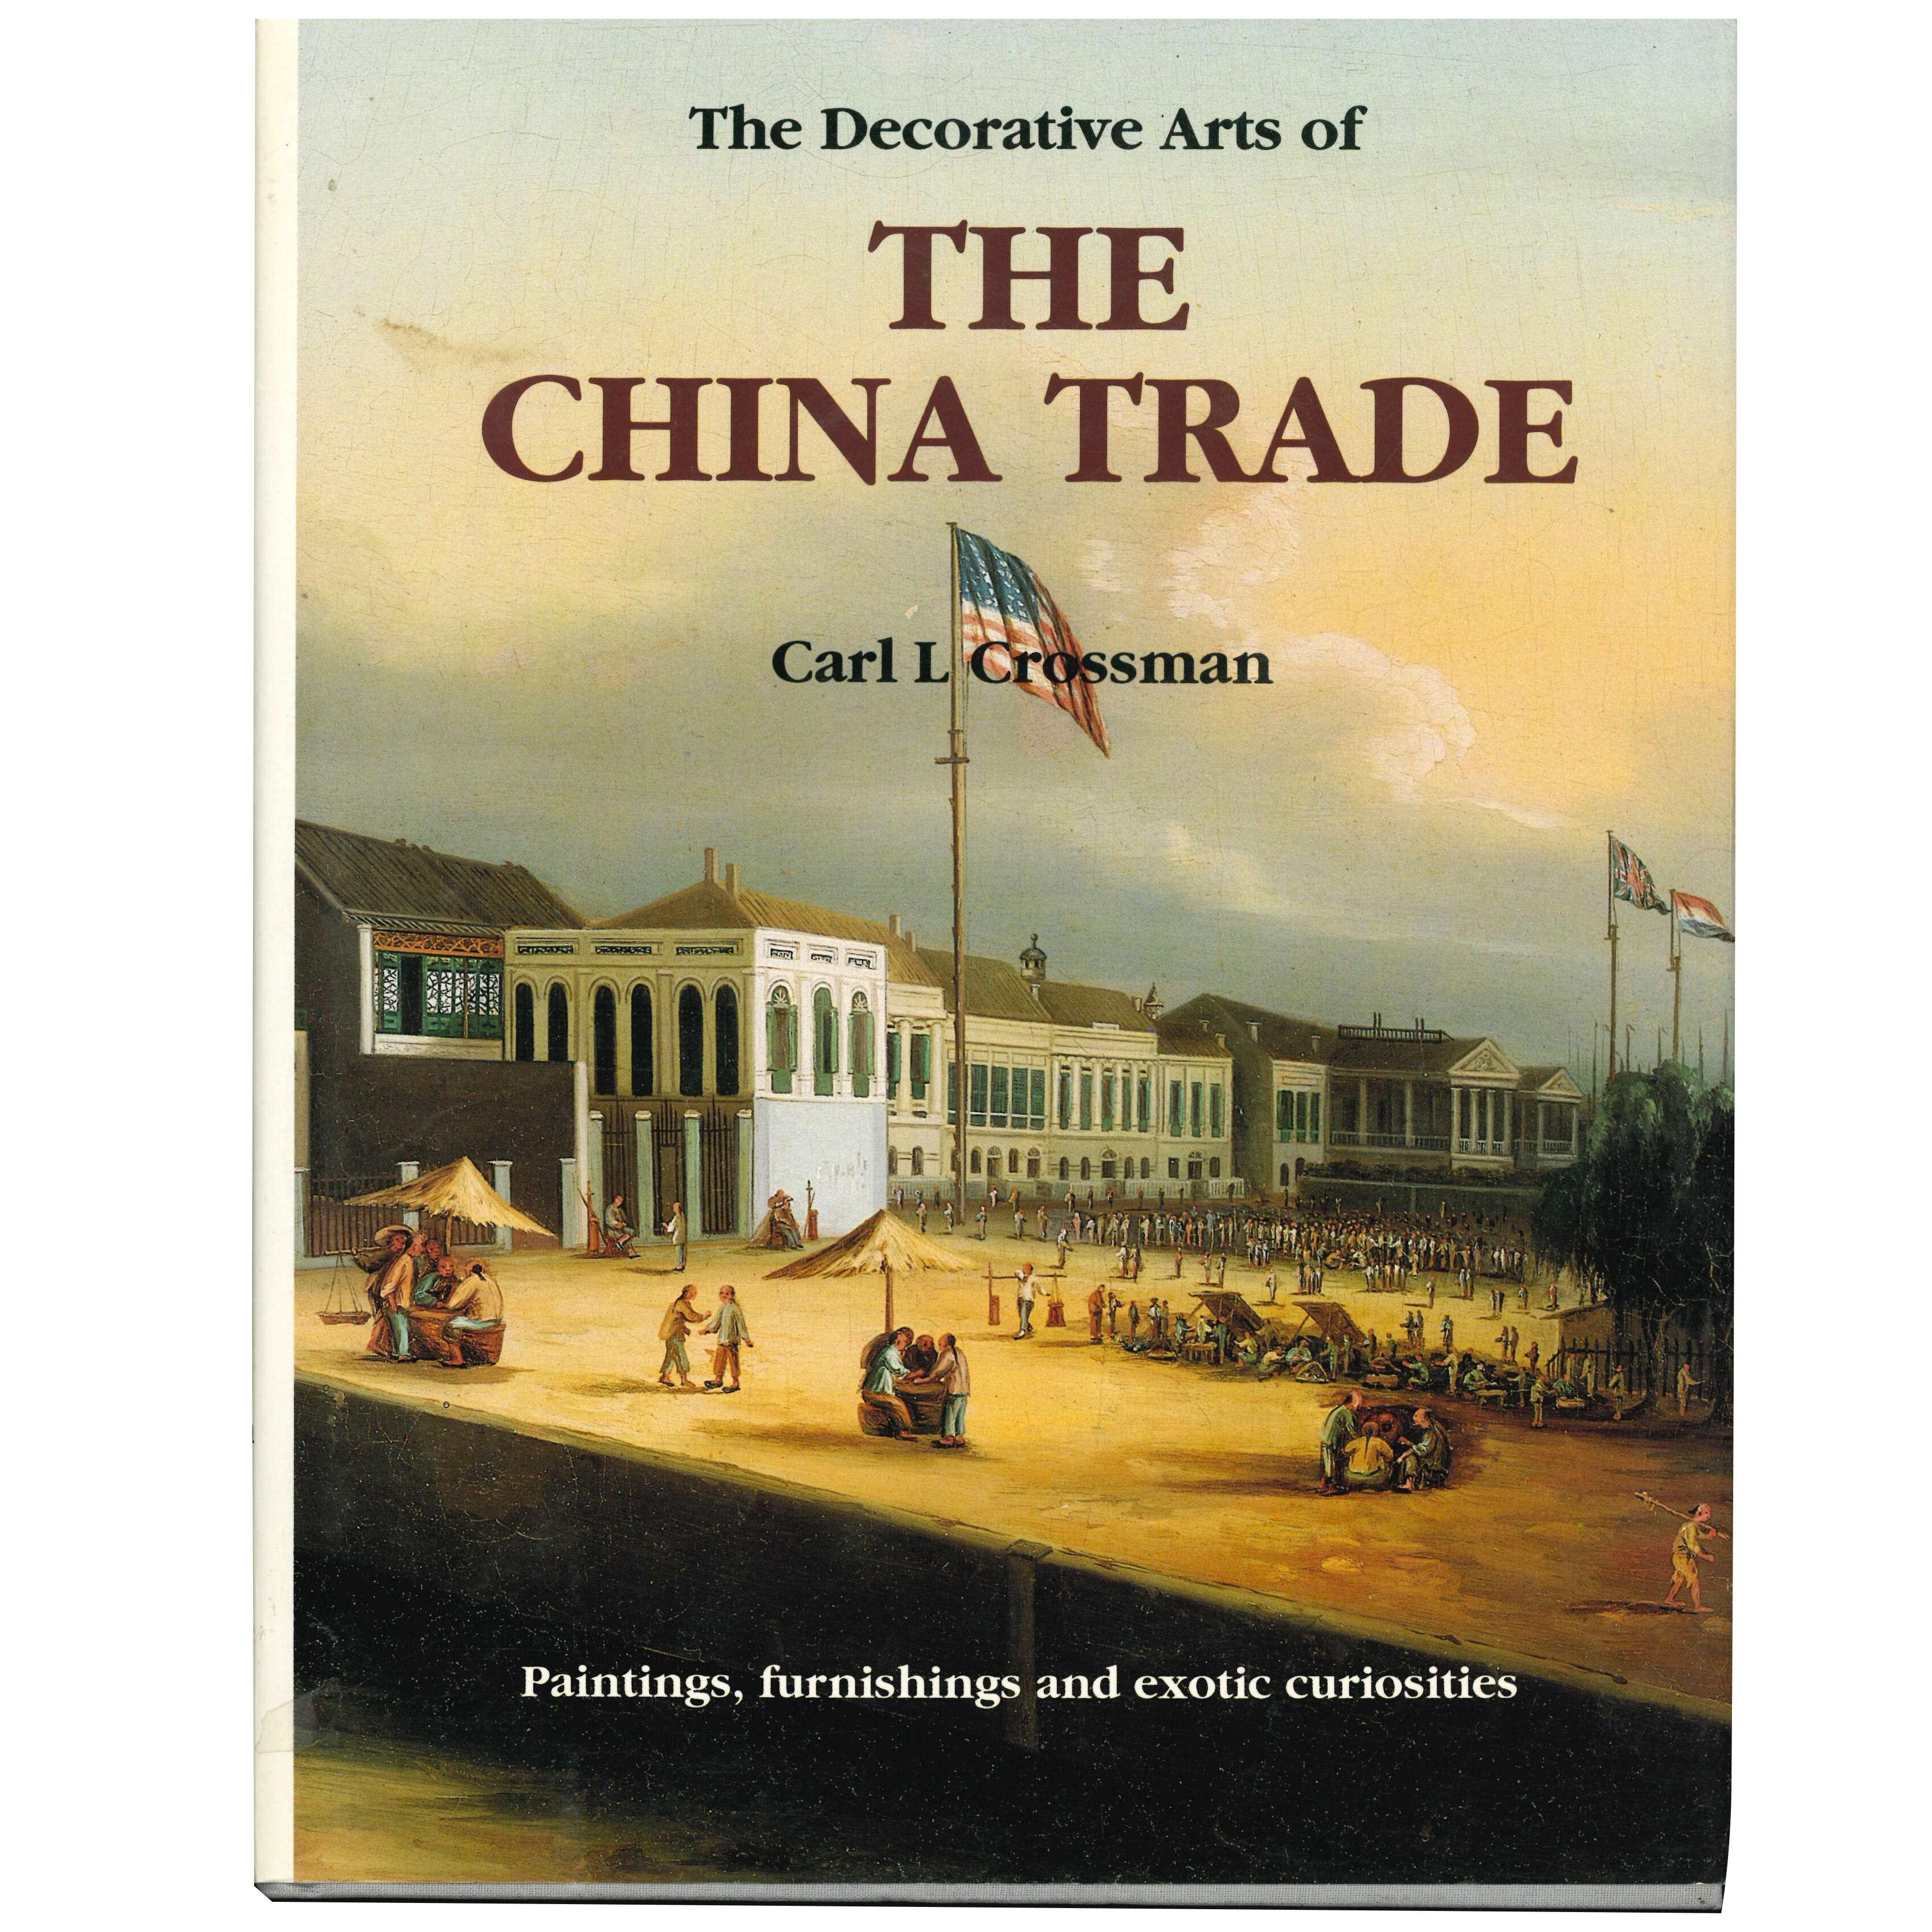 THE CHINA TRADE - The Decorative Arts. Book